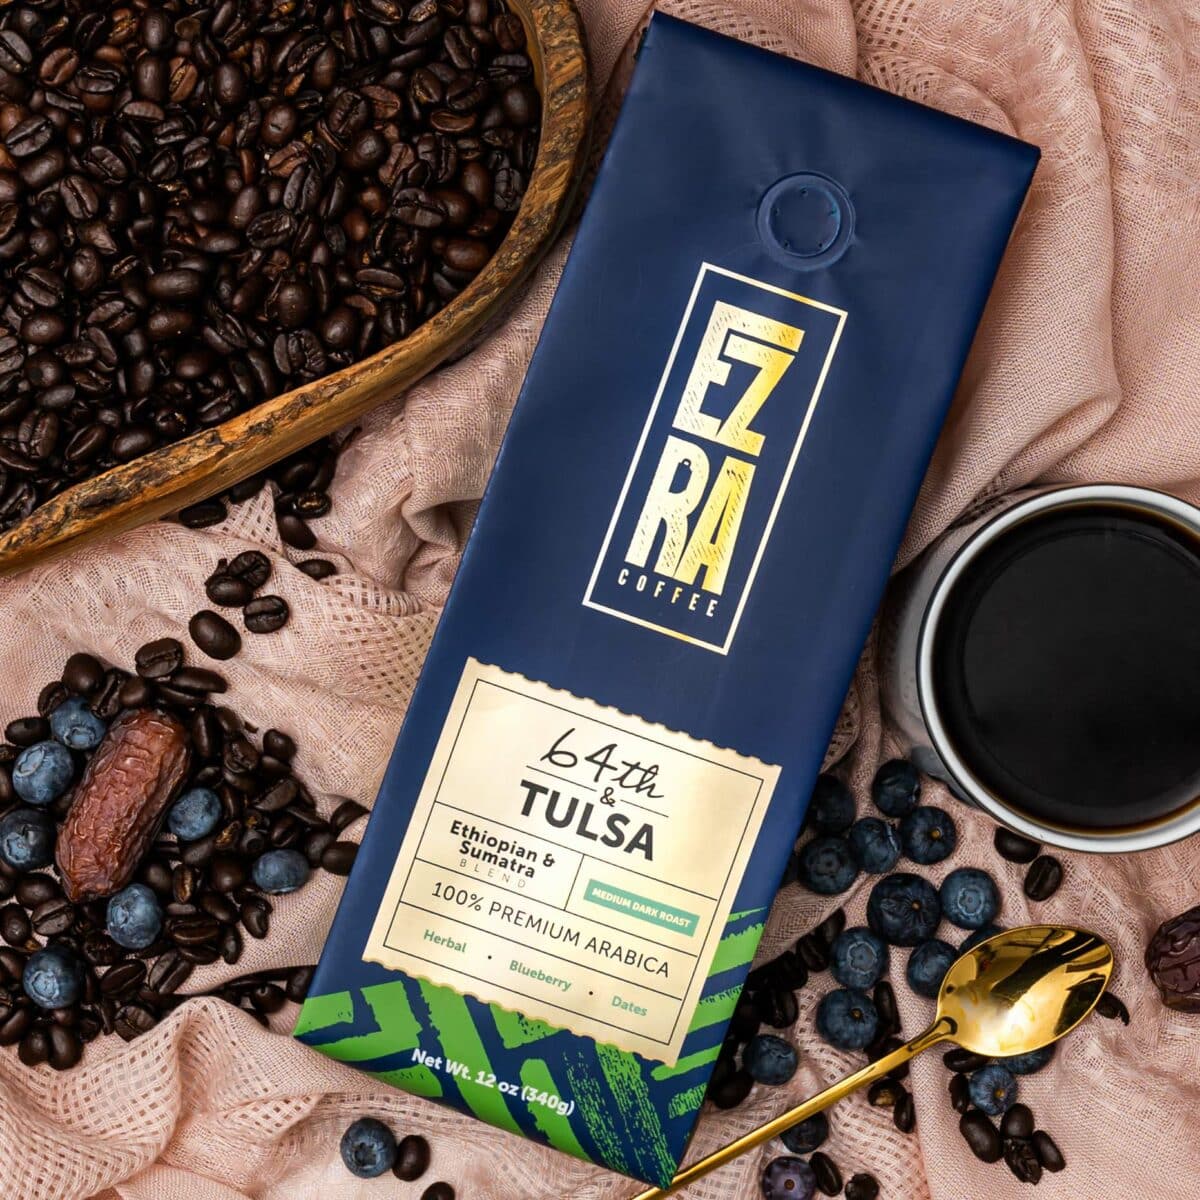 64th & Tulsa Ethiopian & Sumatra blend by Ezra Coffee